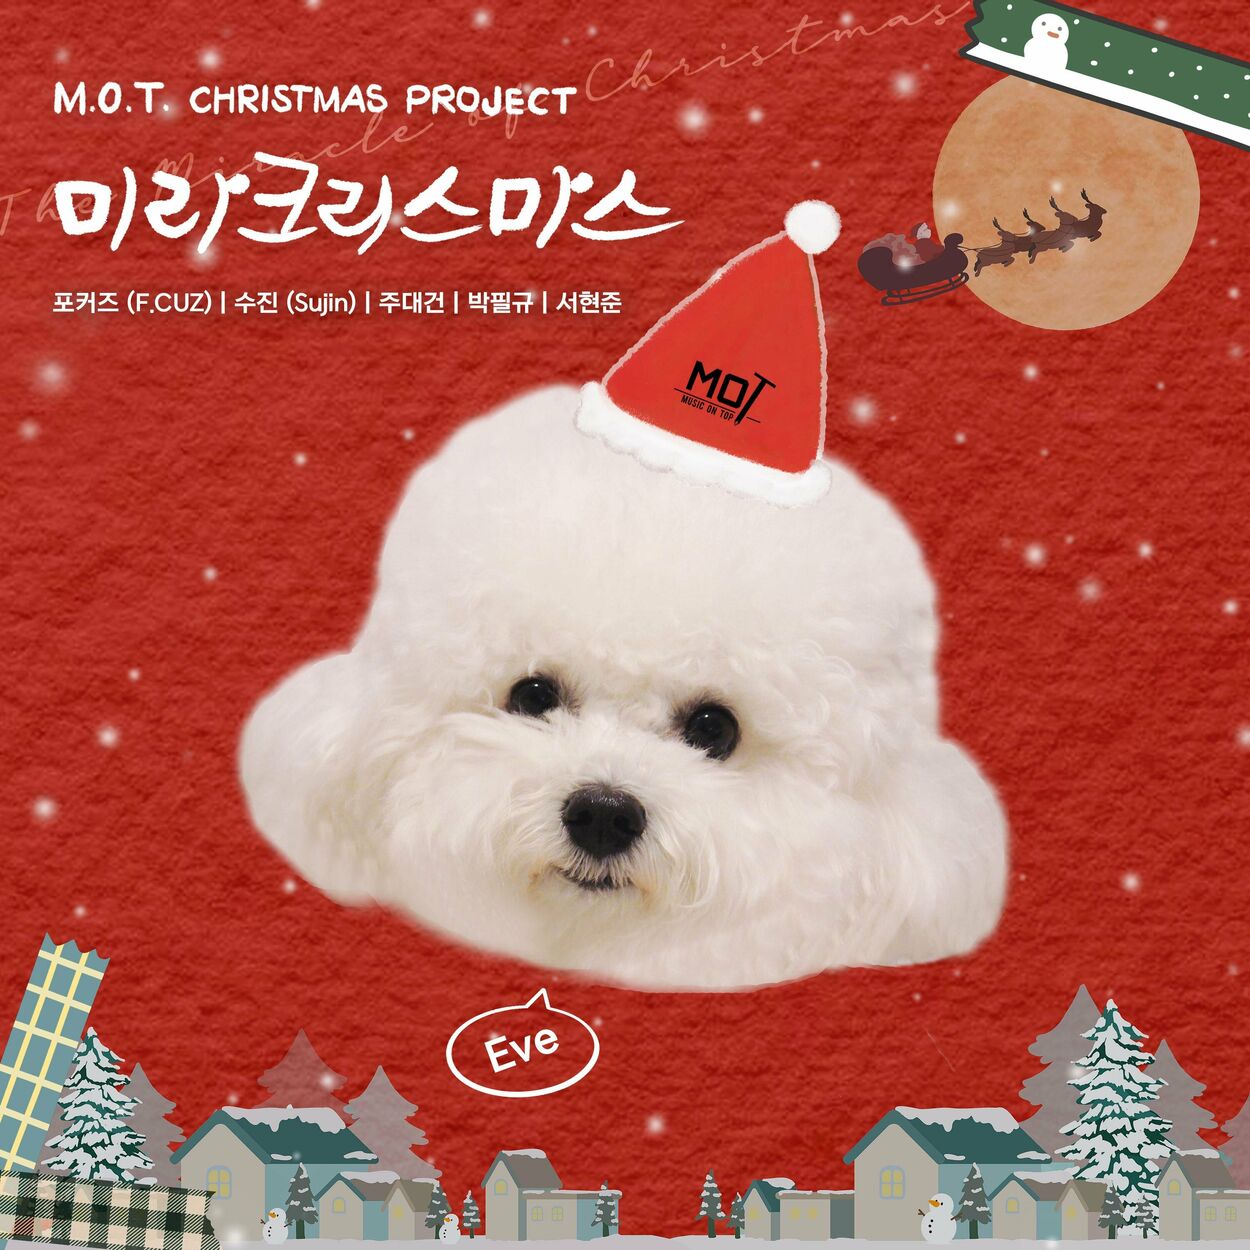 F.Cuz, Sujin, Ju Daegeon, Park Pil kyu, Hyeon Jun Seo – The Miracle of Christmas – Single